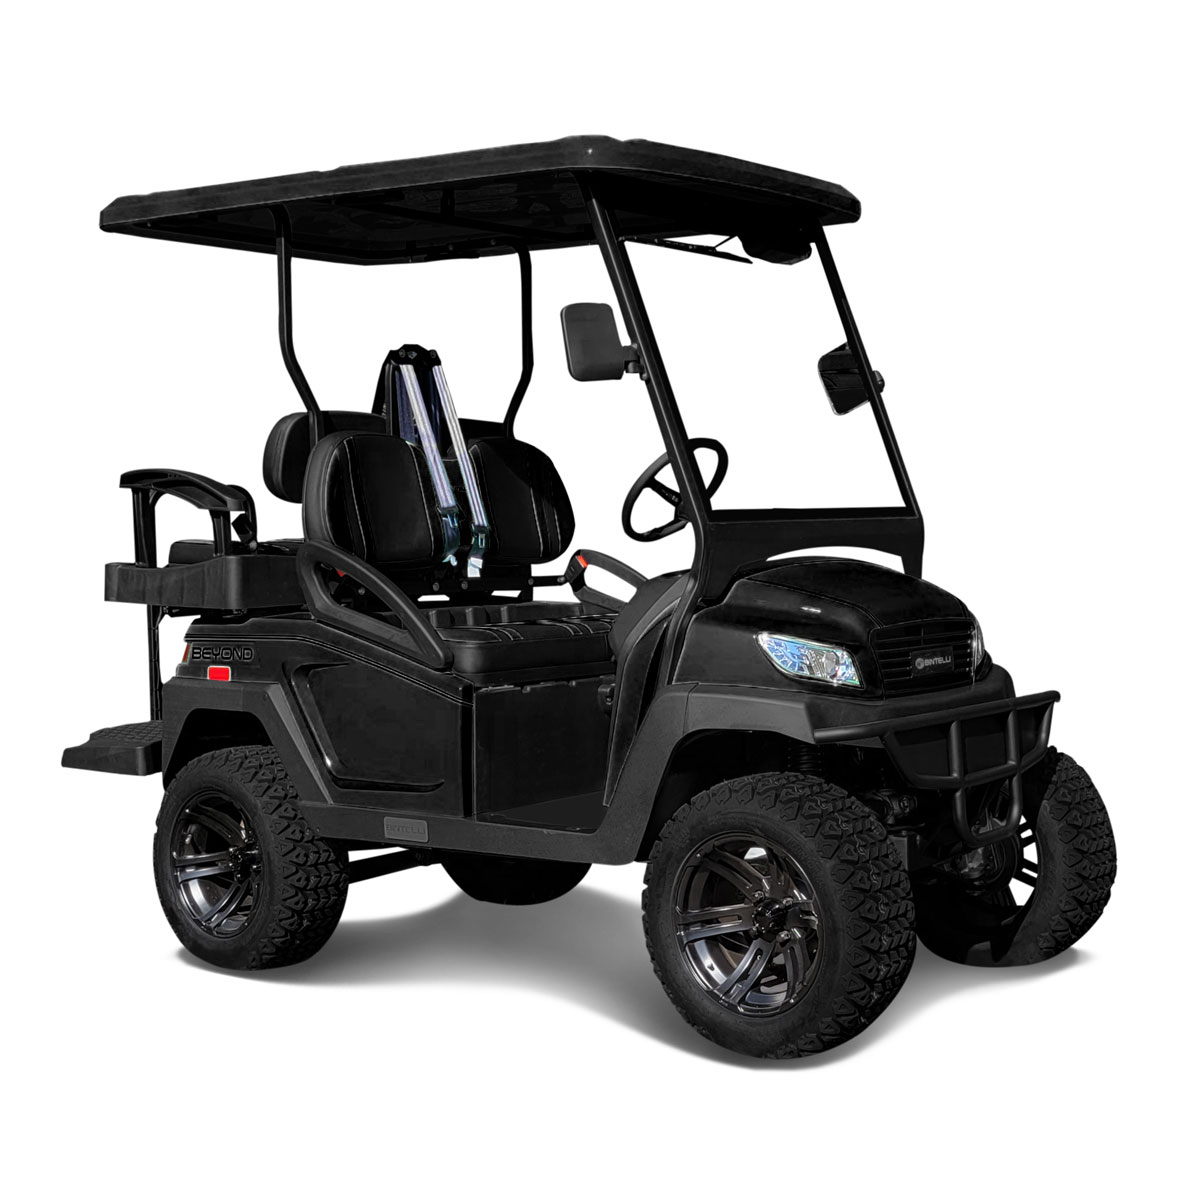 Bintelli Beyond Lifted 4PR street legal golf cart in Black